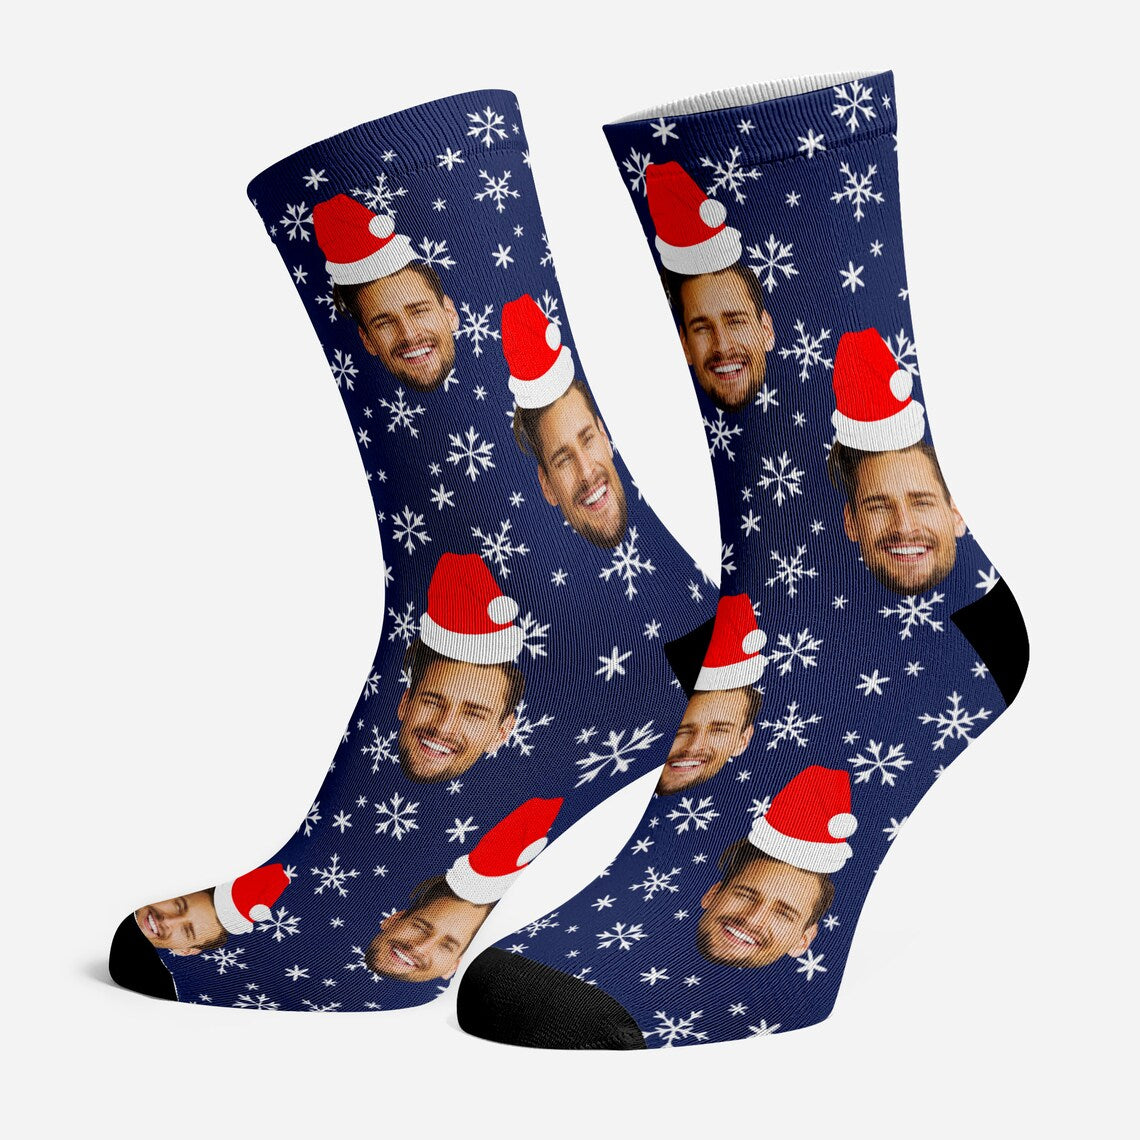 Christmas Customized Face Photo Socks